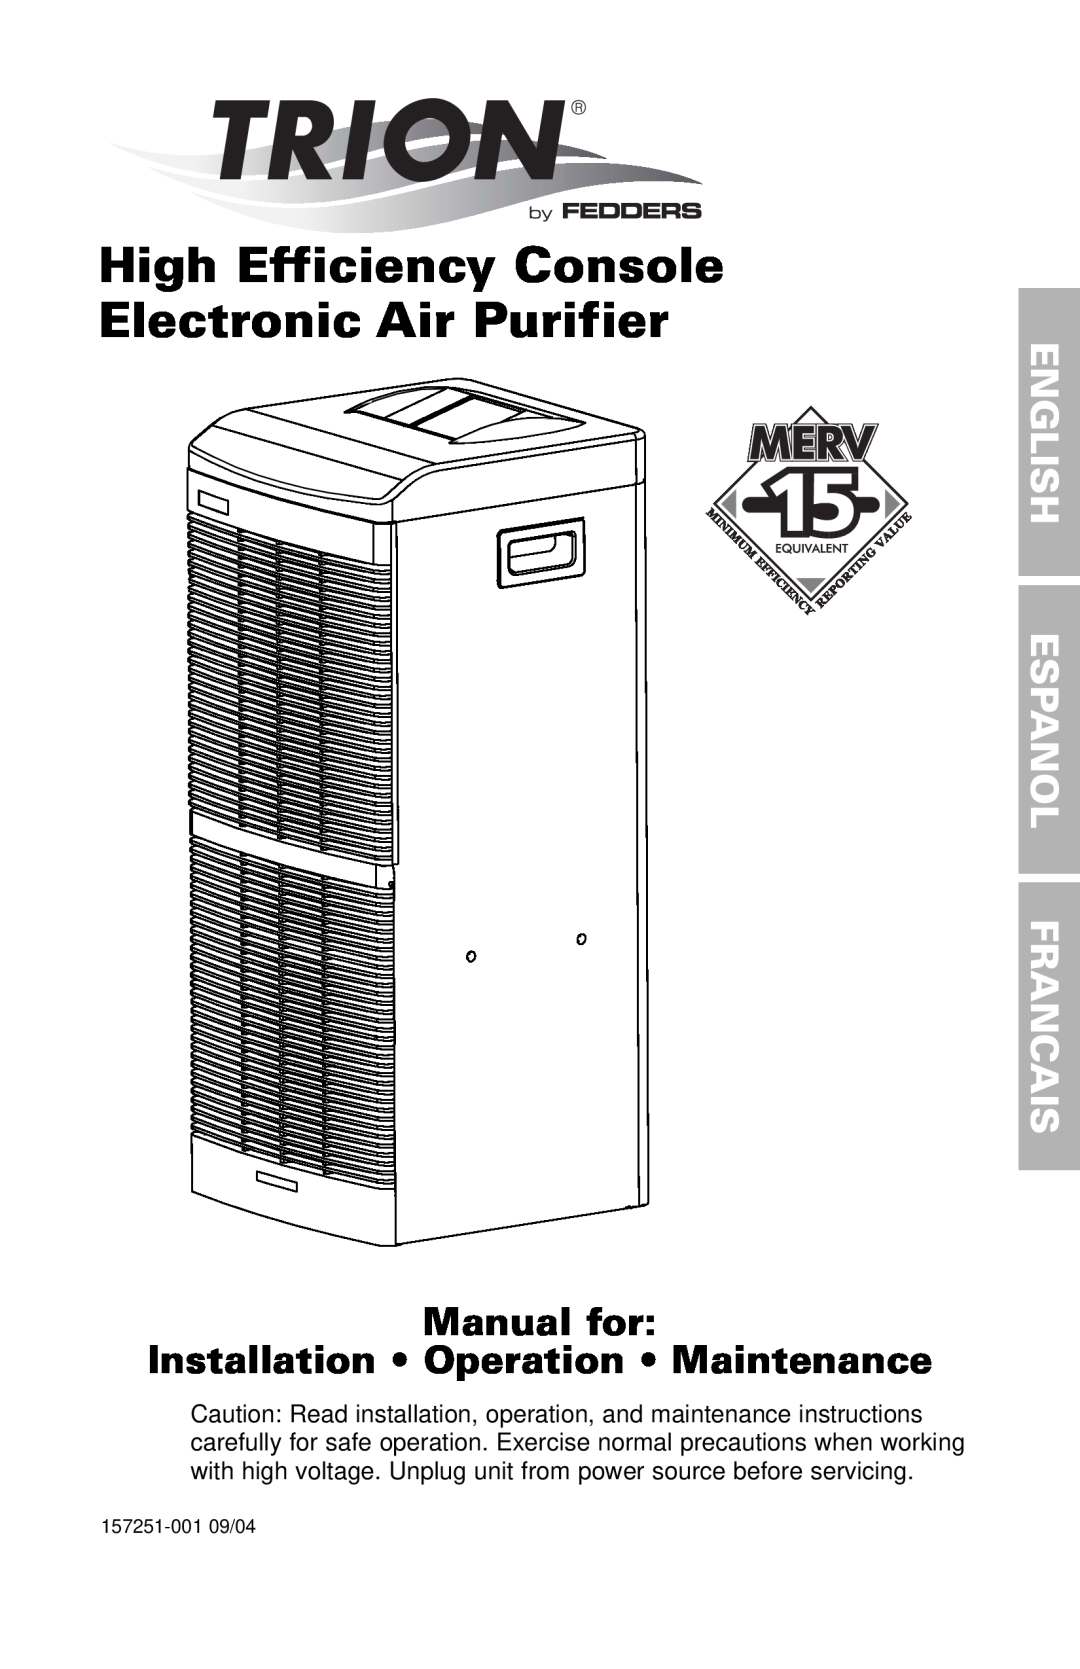 Trion High Efficiency Console Electronic Air Purifier manual English Espanol Francais 